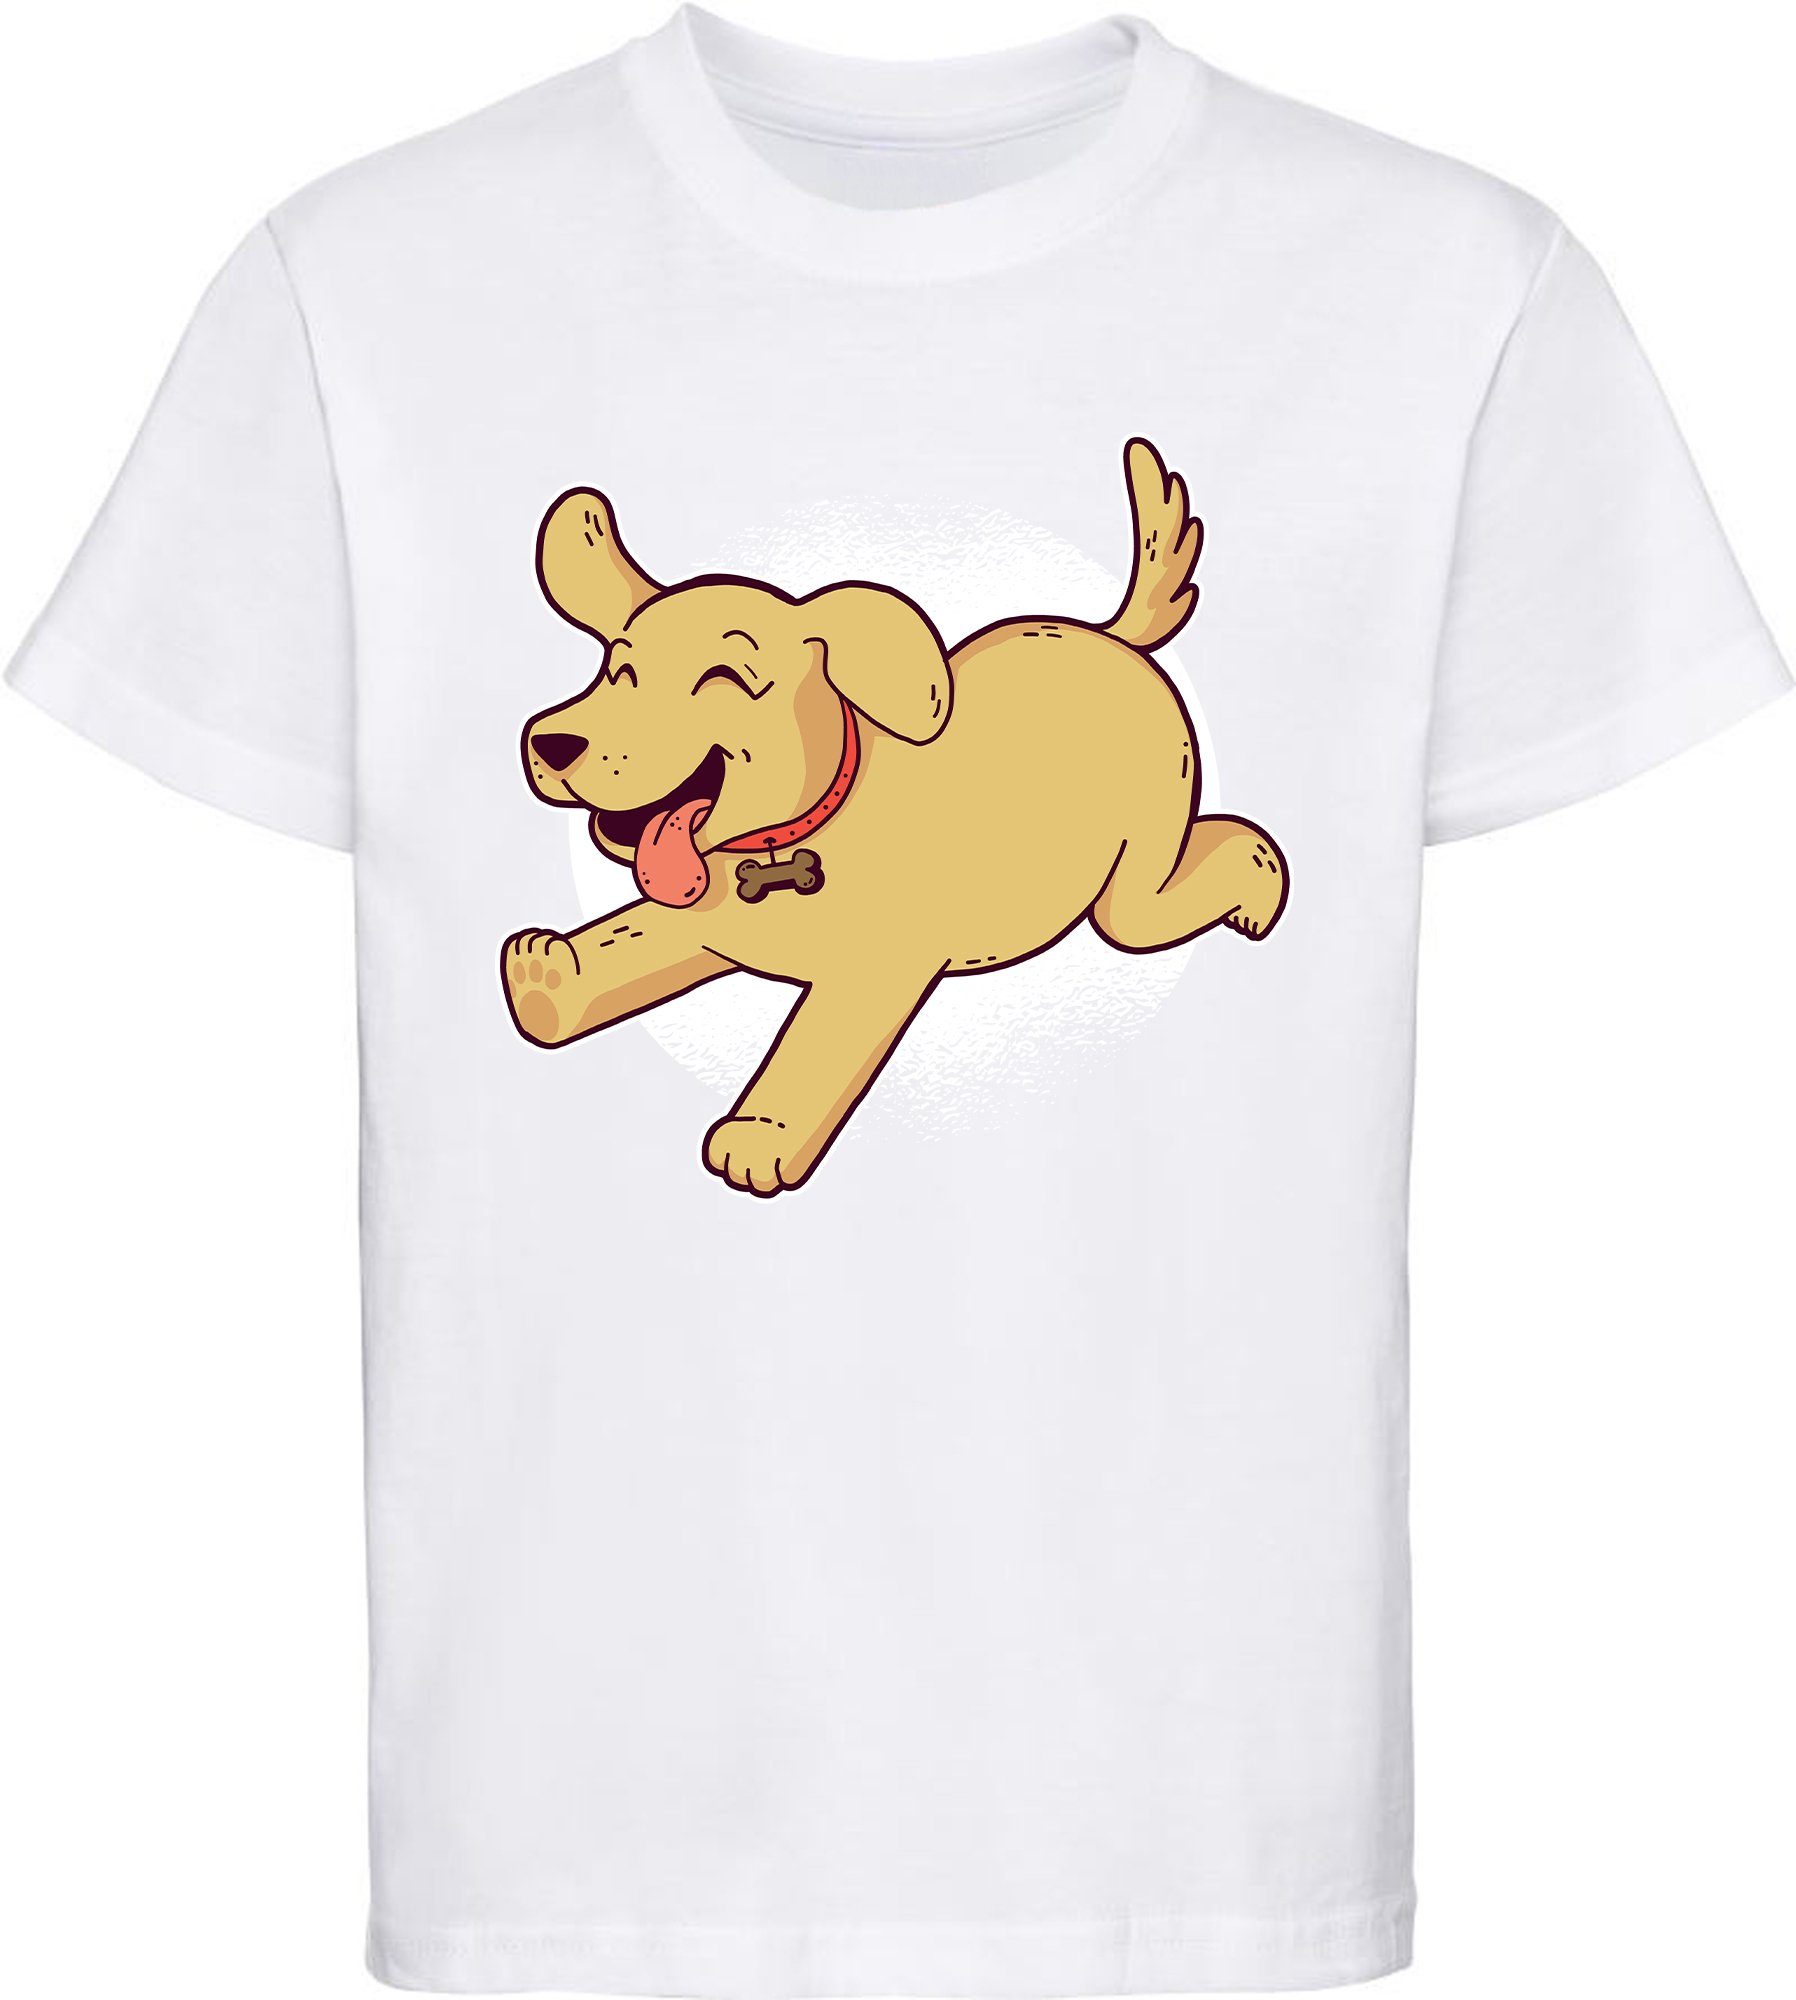 MyDesign24 T-Shirt Kinder Hunde Print Shirt bedruckt - Spielender Labrador Welpe Baumwollshirt mit Aufdruck, i248 weiss